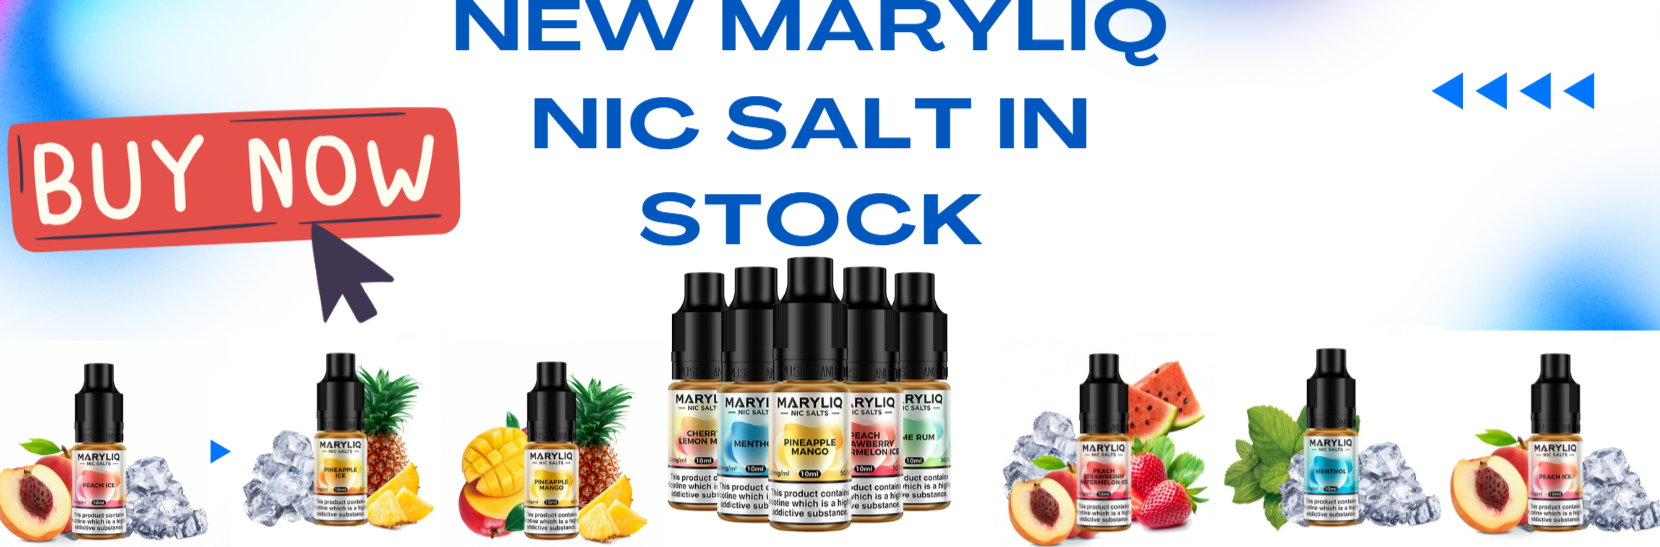 Maryliq Nic salt by Lost Mary